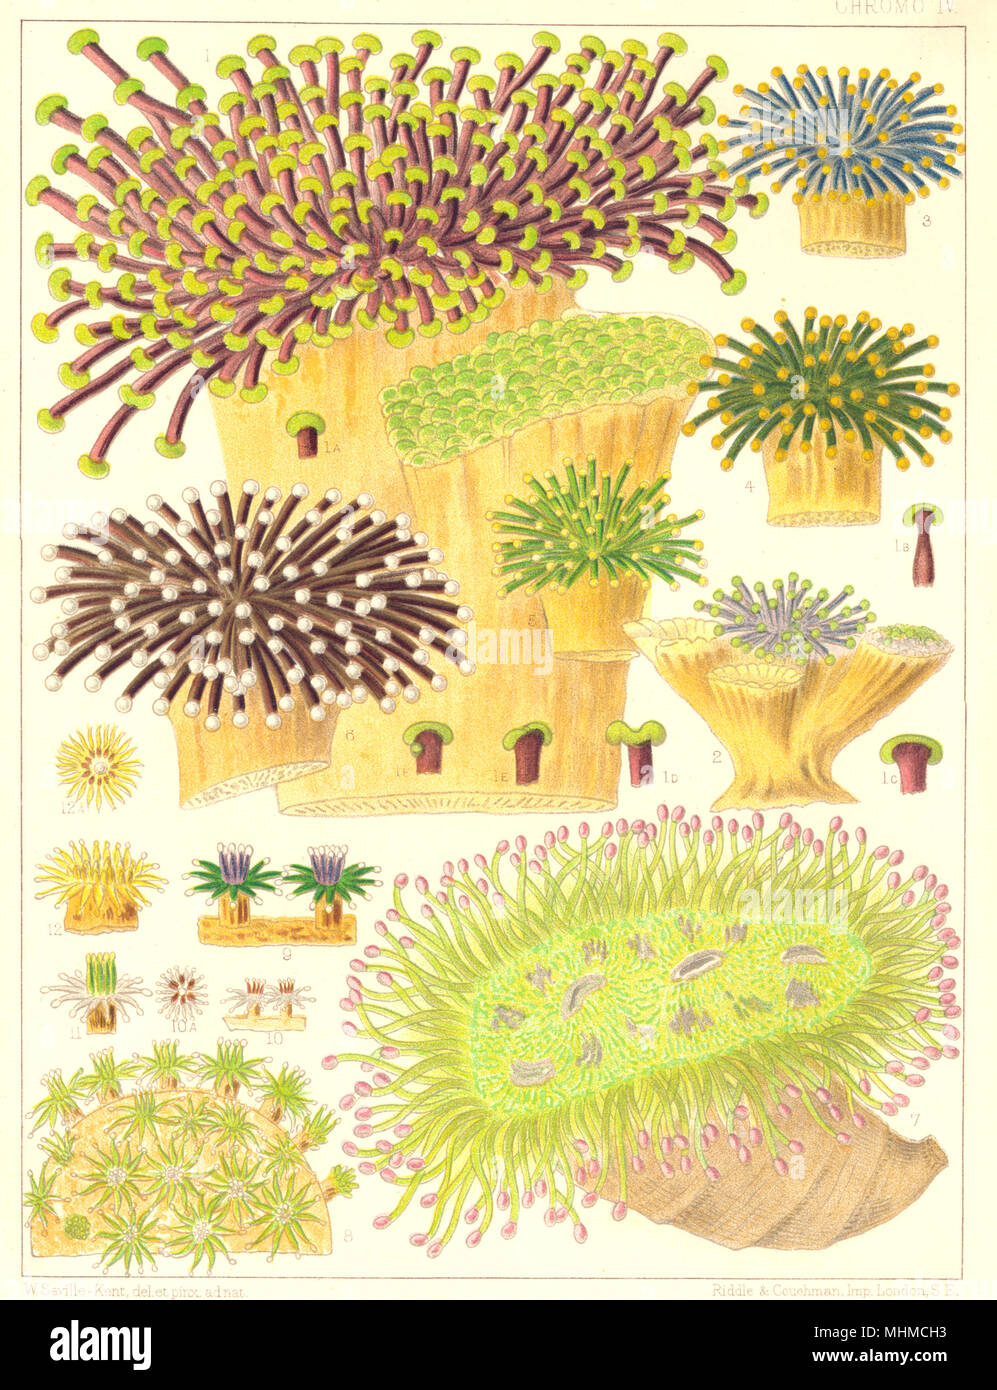 GREAT BARRIER REEF CORAL.Rhipidogyra;Euphyllia rugosa,Glabrescens 1900 print Stock Photo